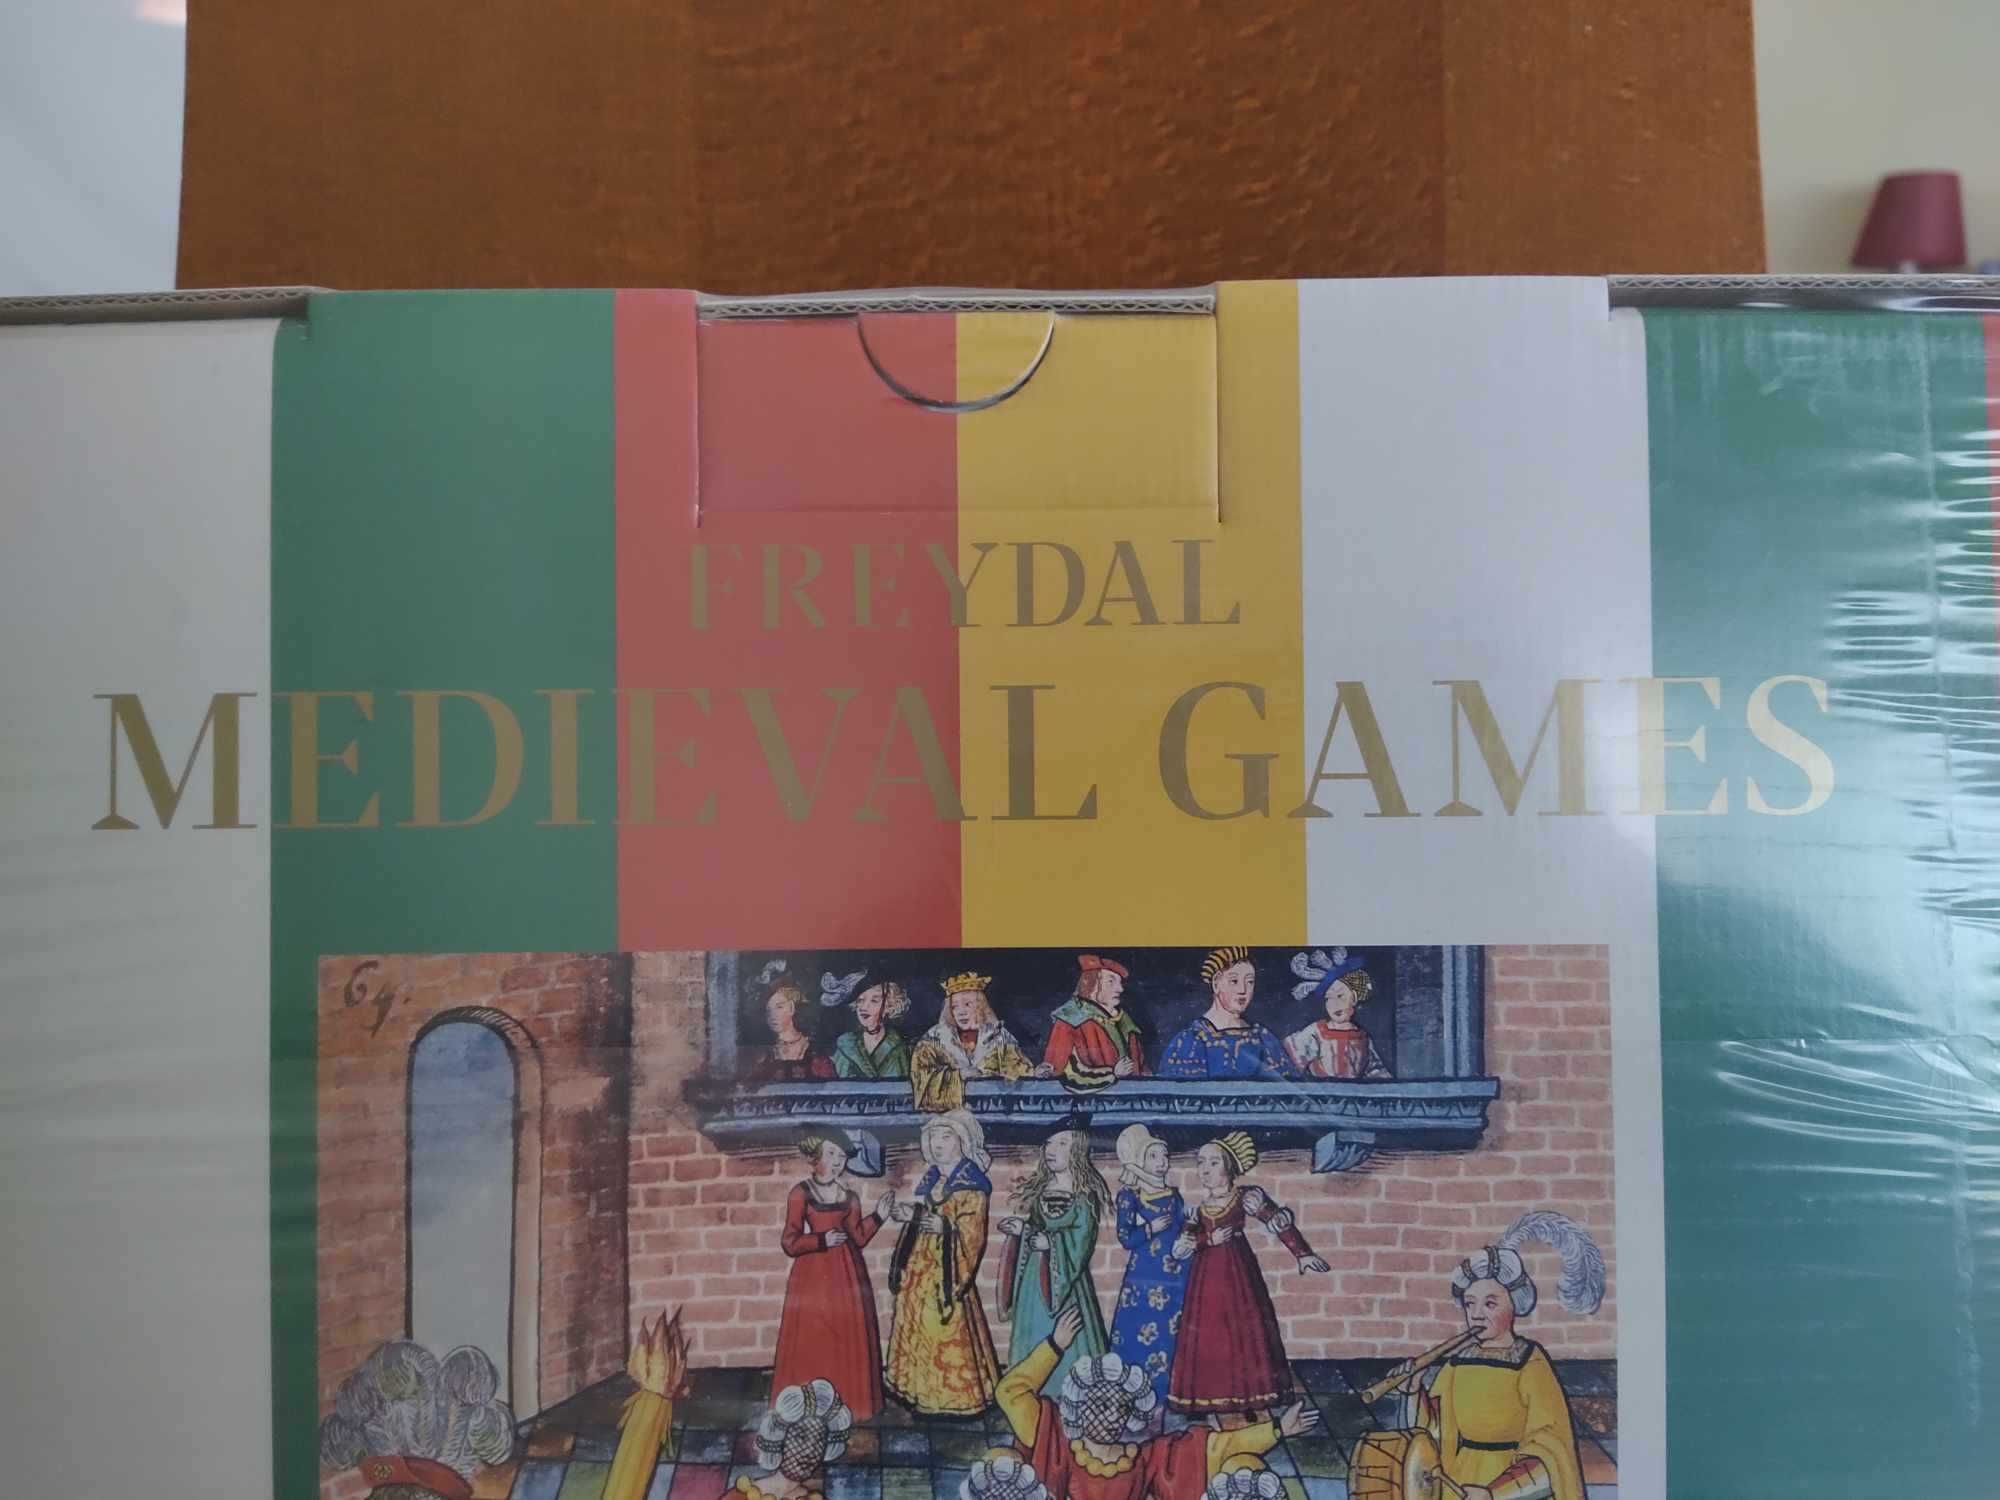 Livro “Freydal. Medieval Games.